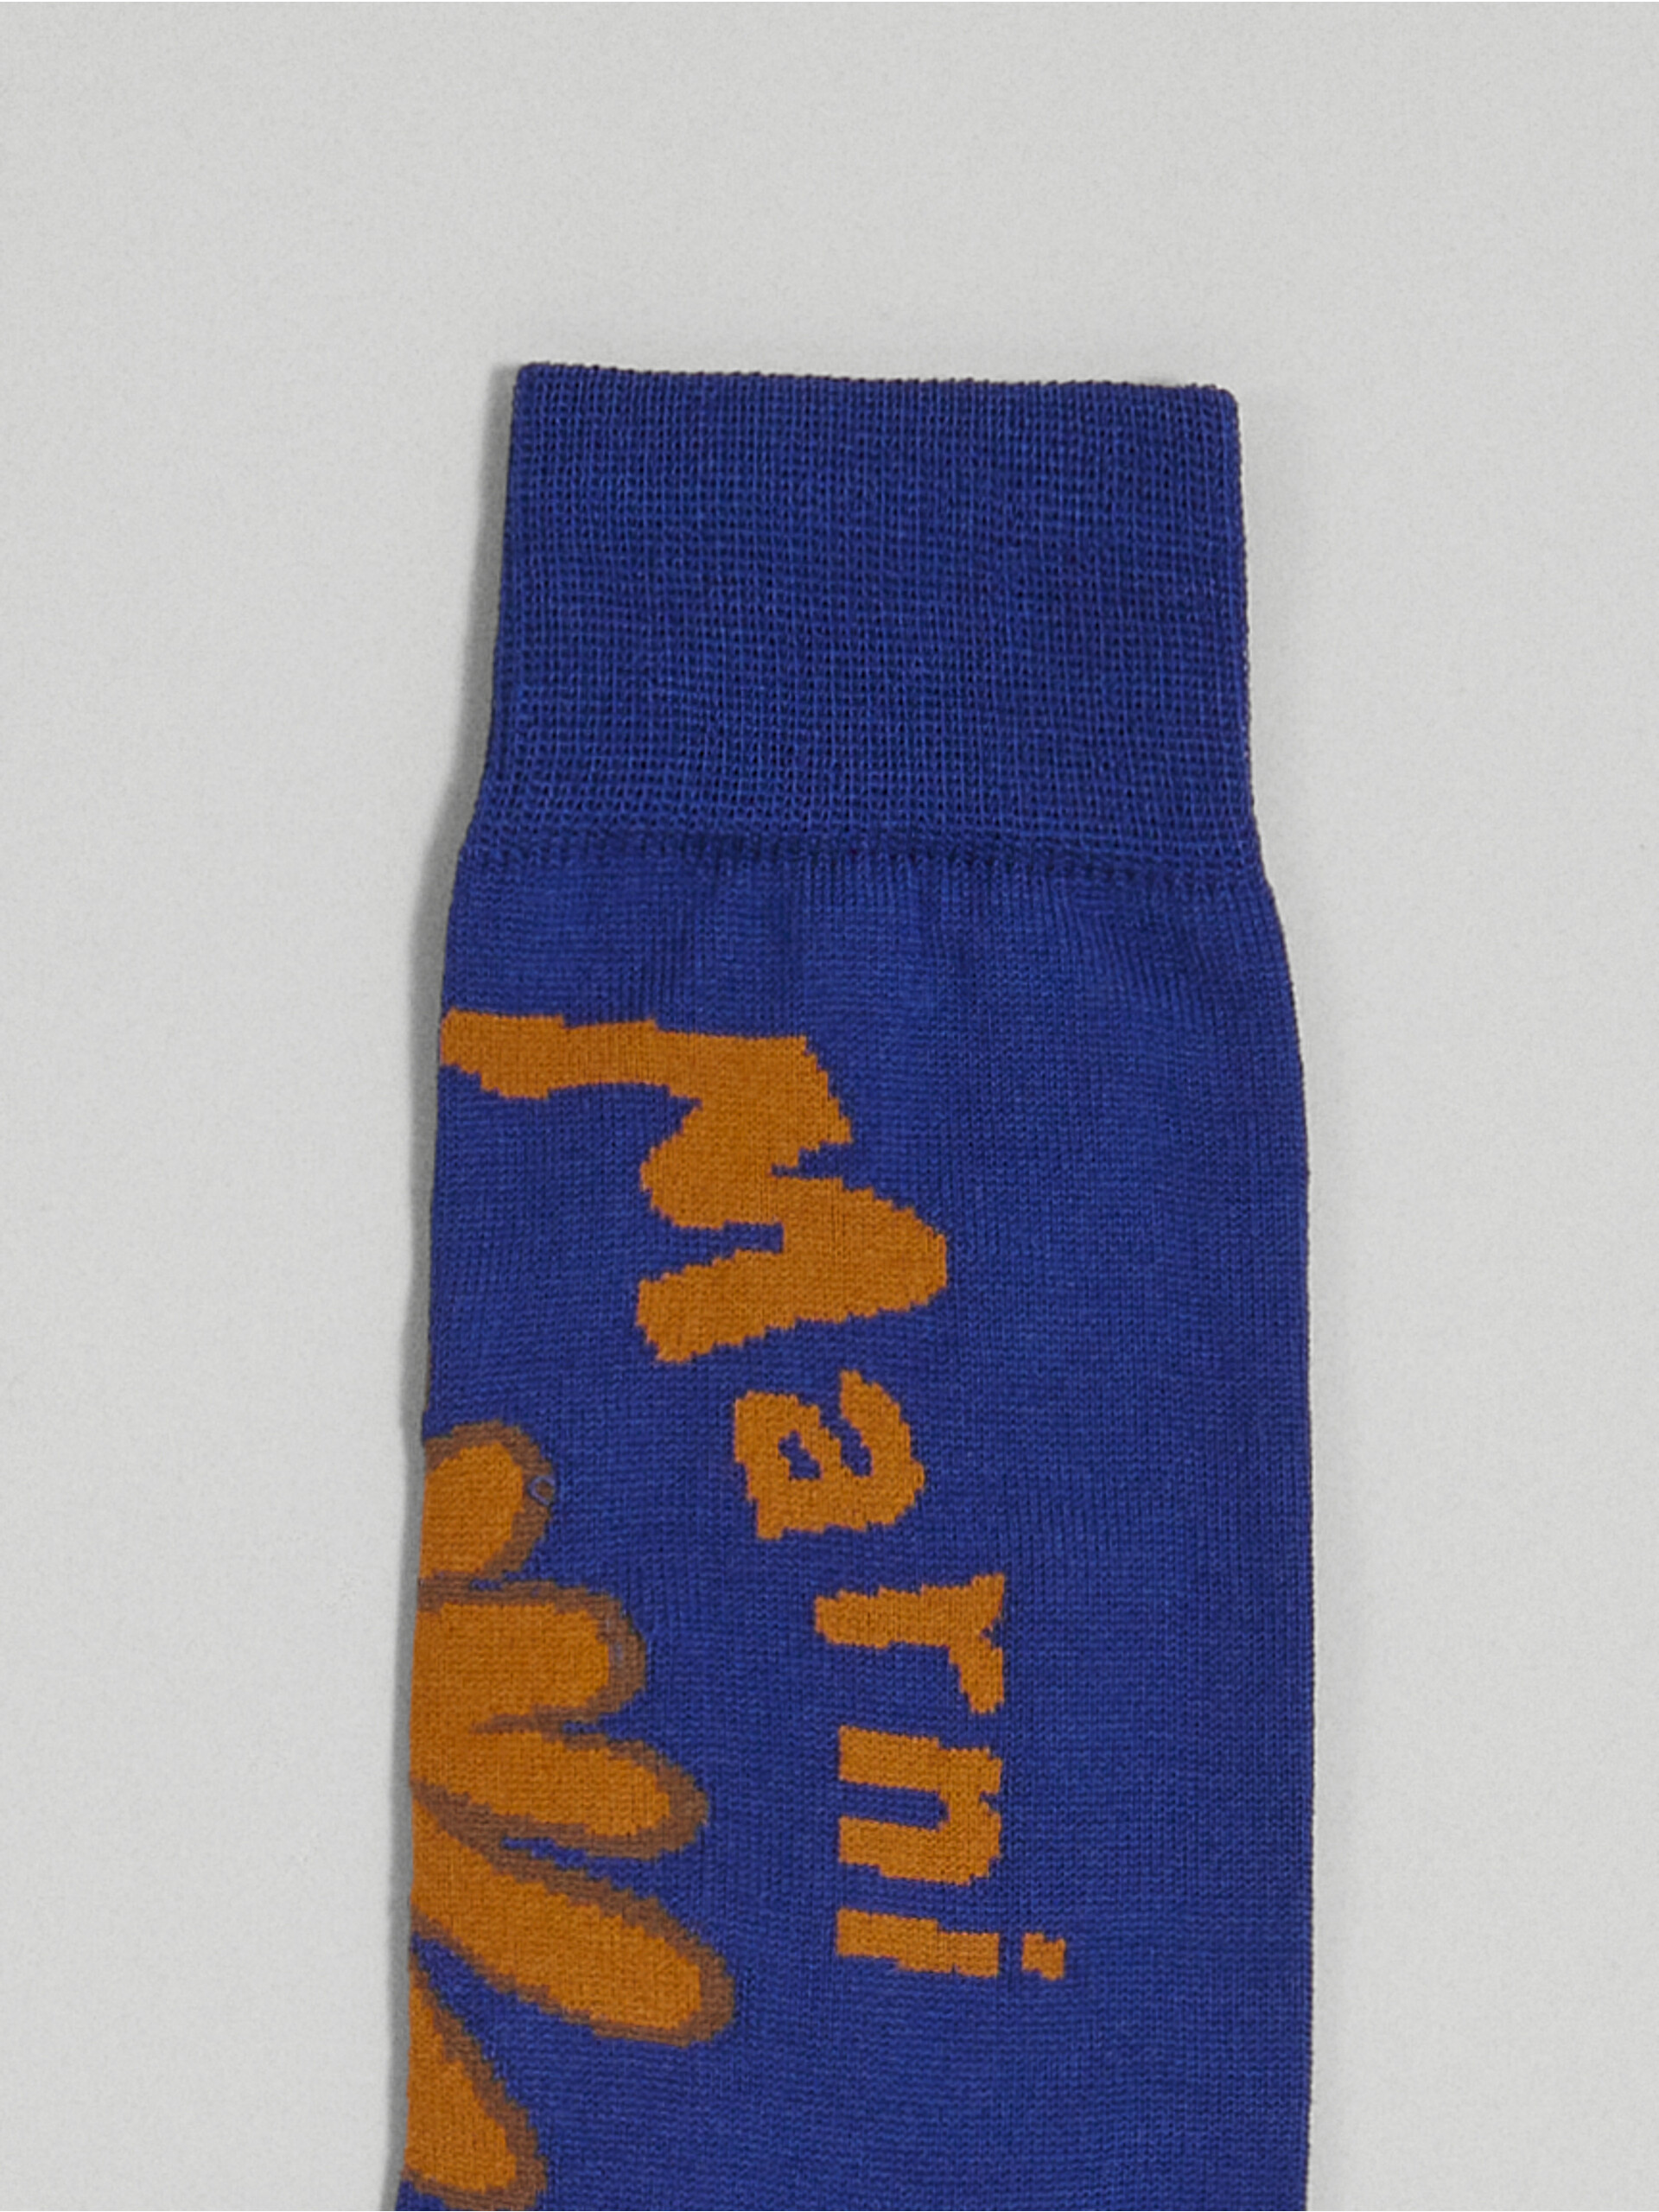 Blue 70’s Flower jacquard cotton and nylon sock - Socks - Image 3